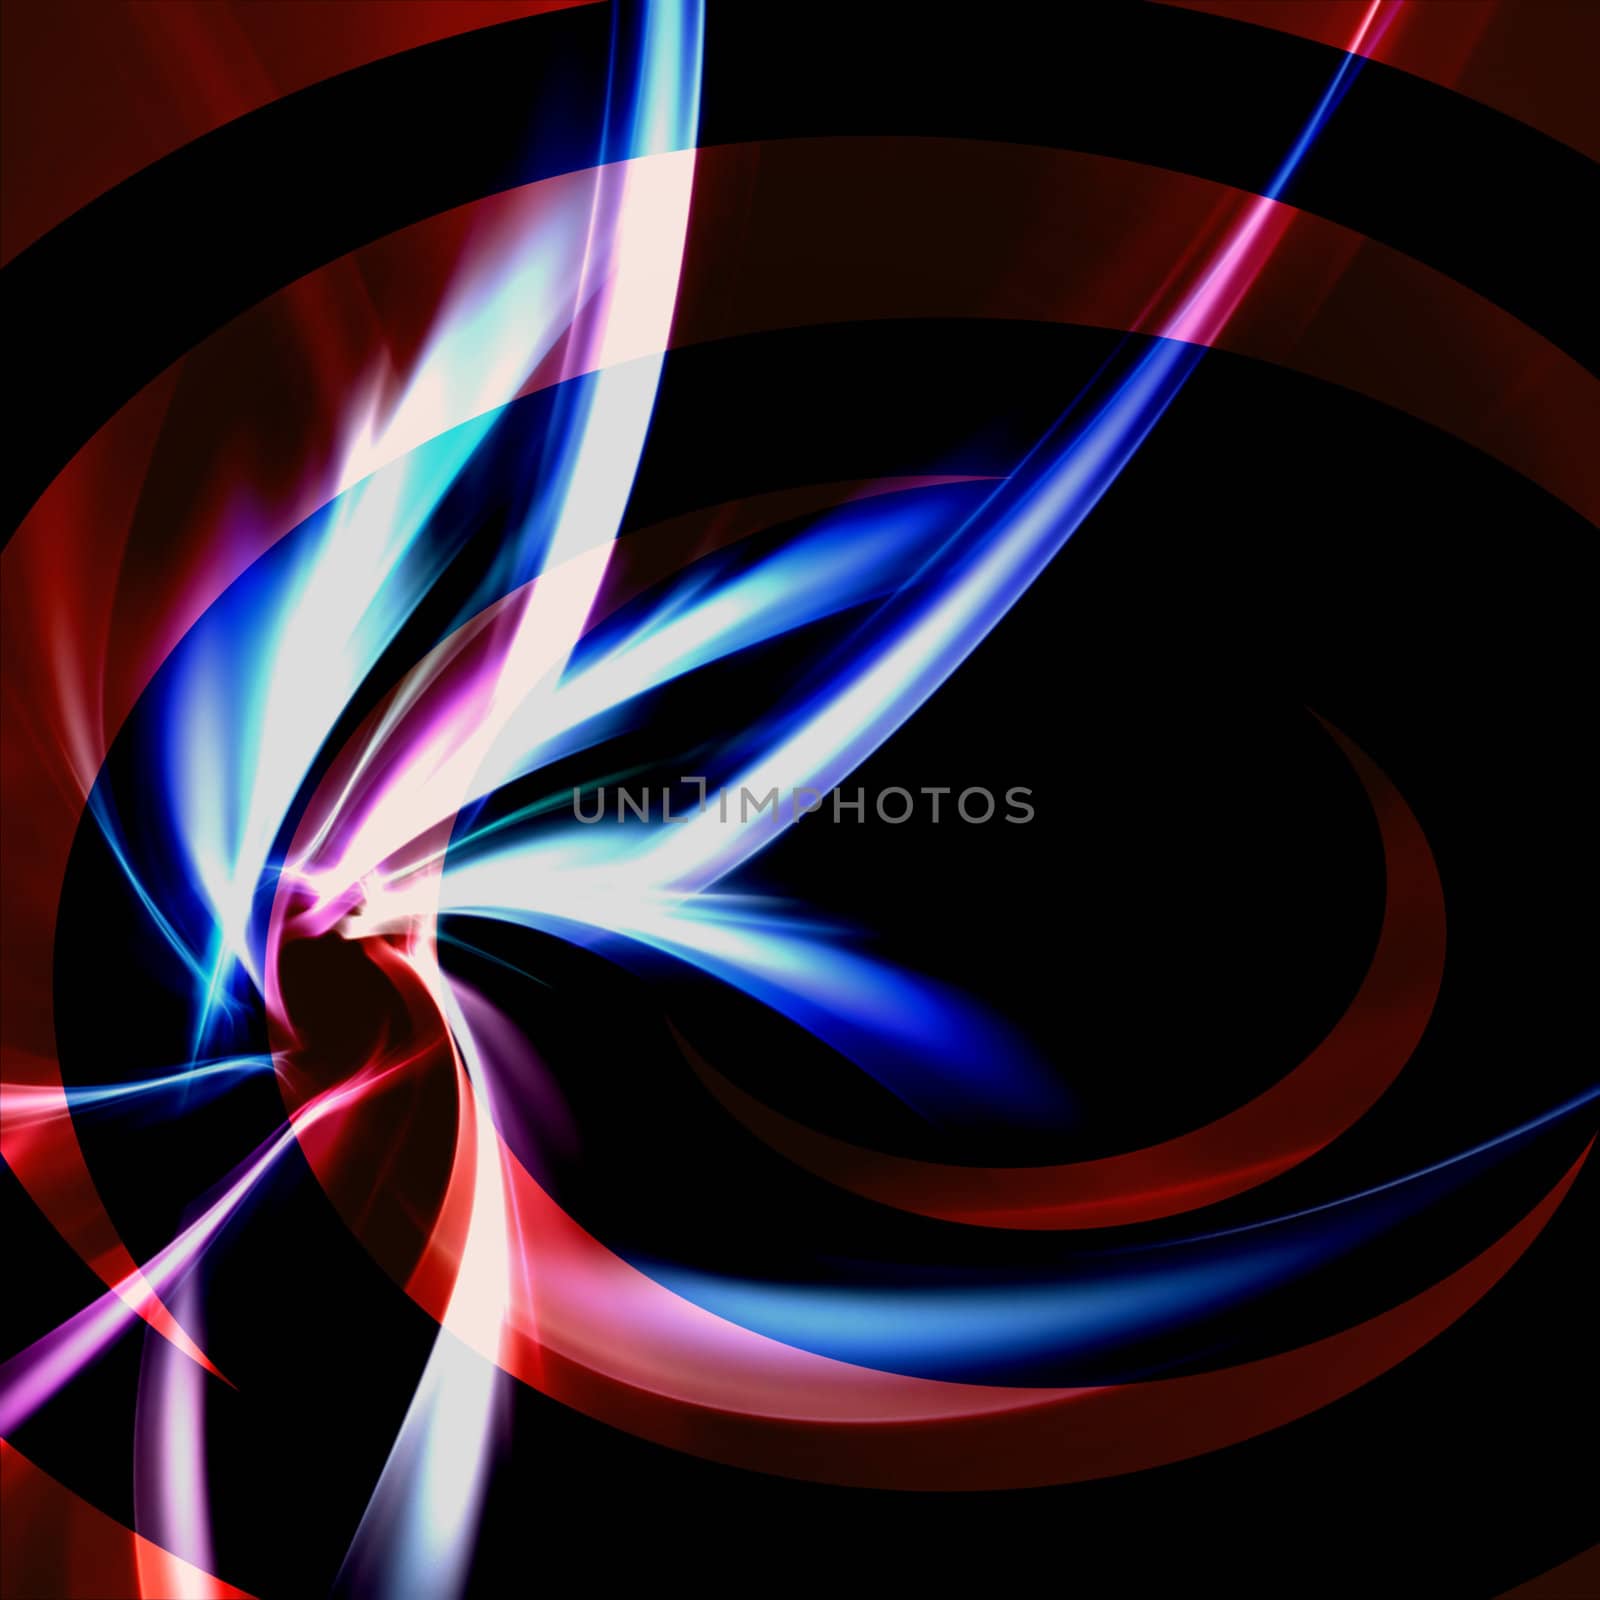 An abstract fractal design that spirals in a circular motion.